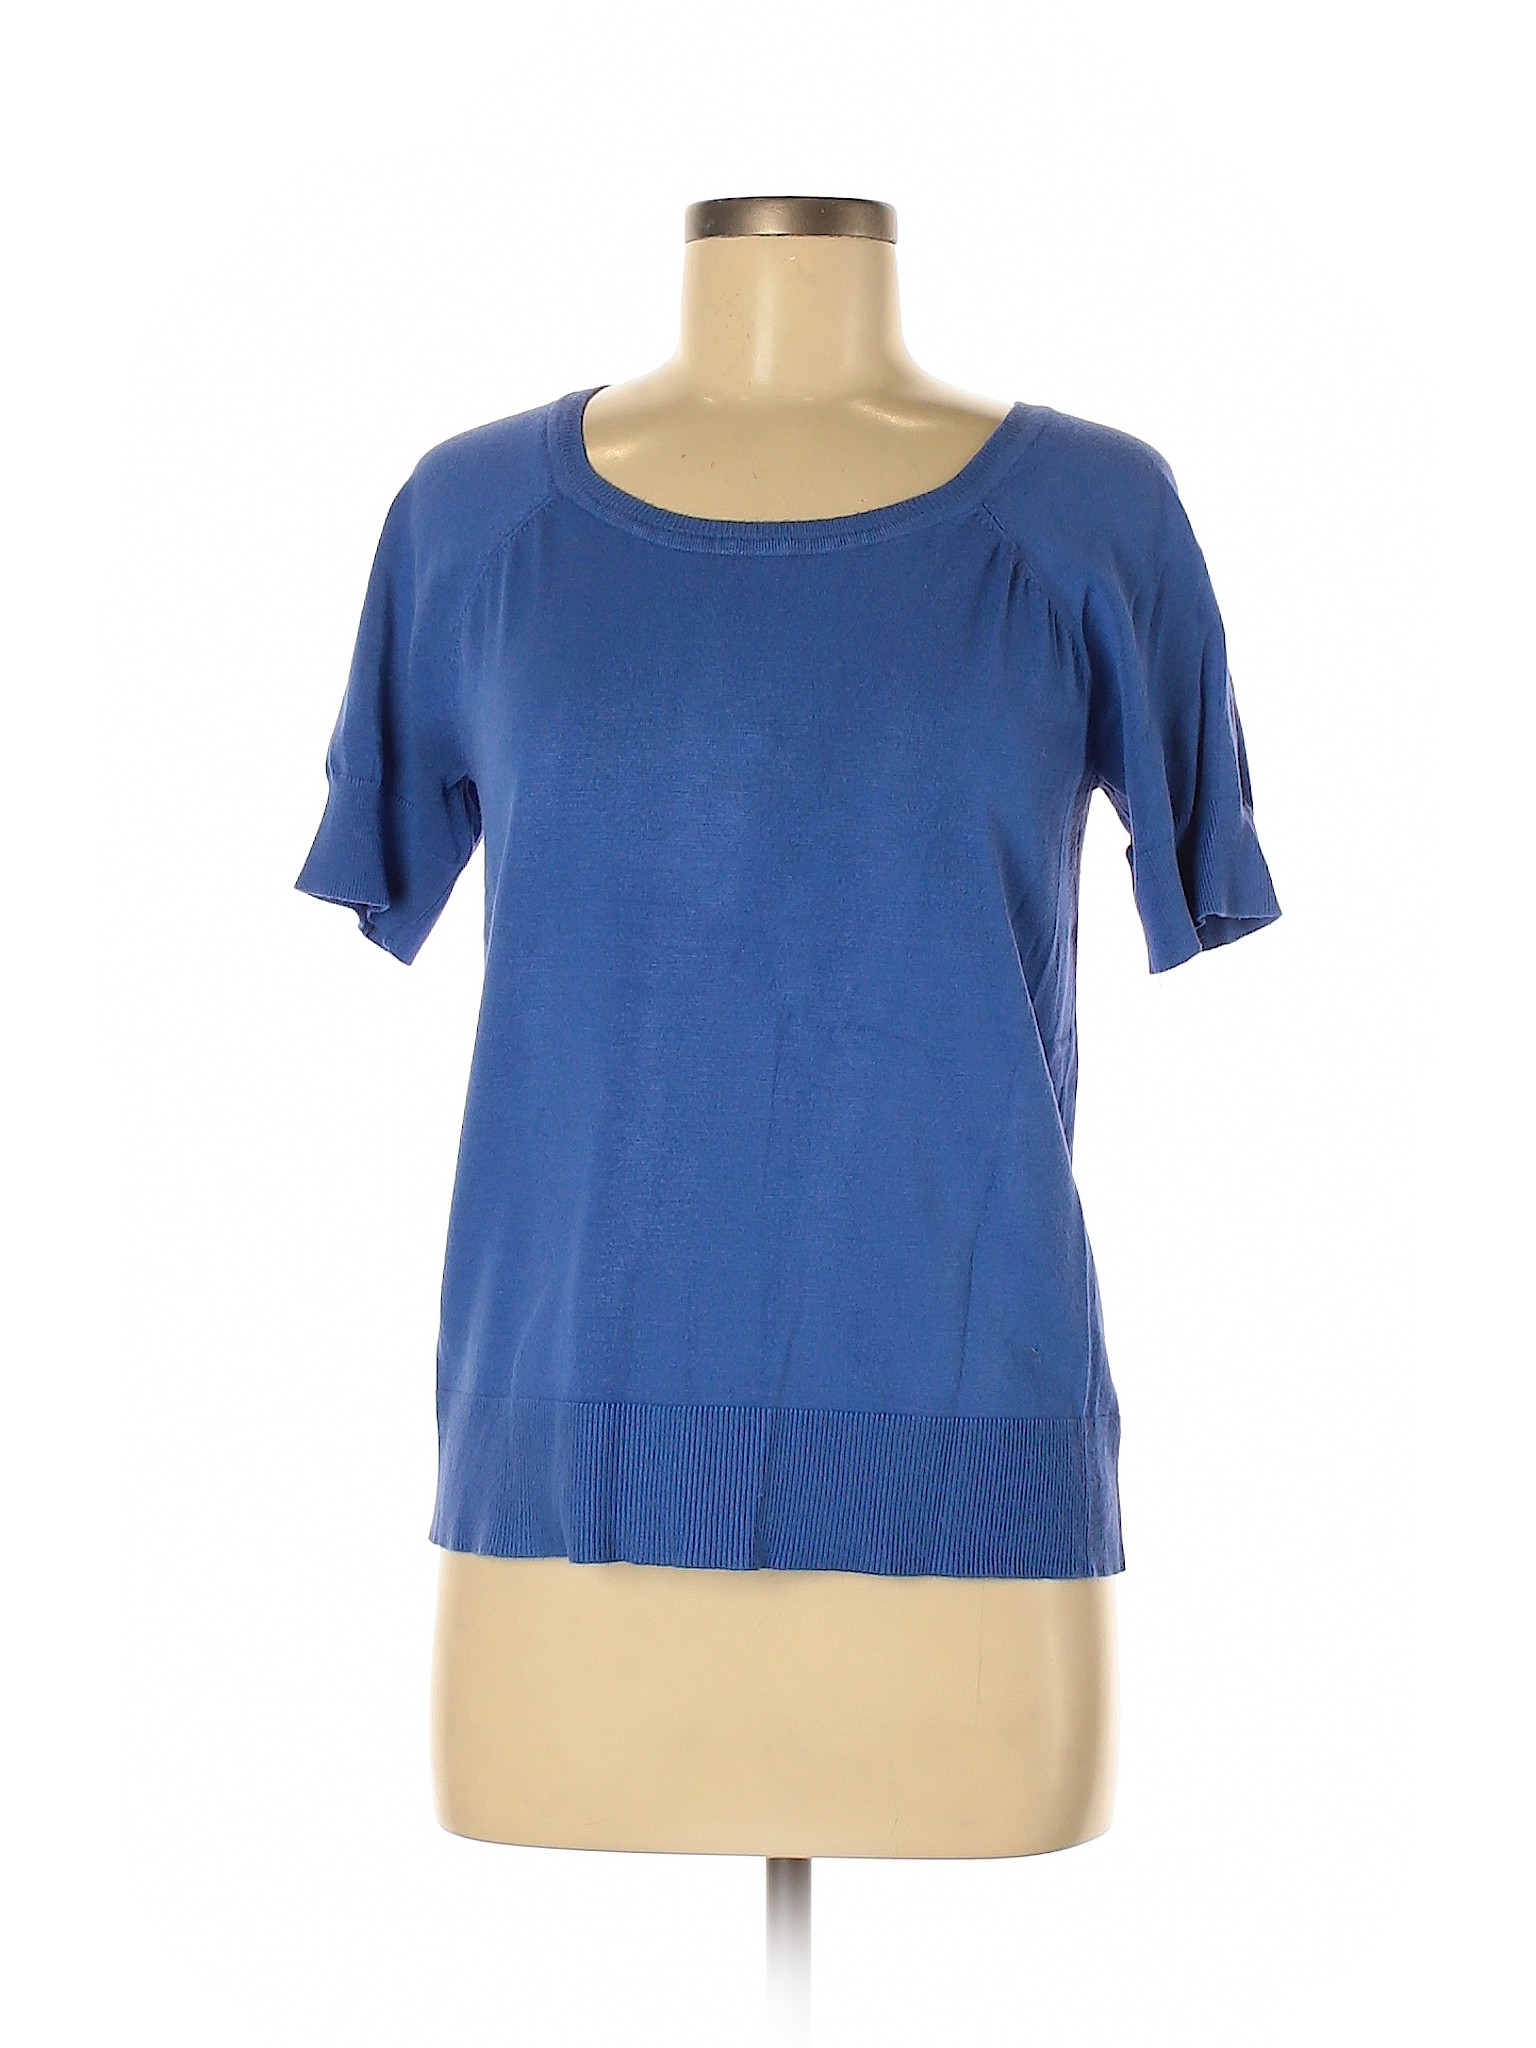 Apt. 9 Women Blue Short Sleeve Top M | eBay